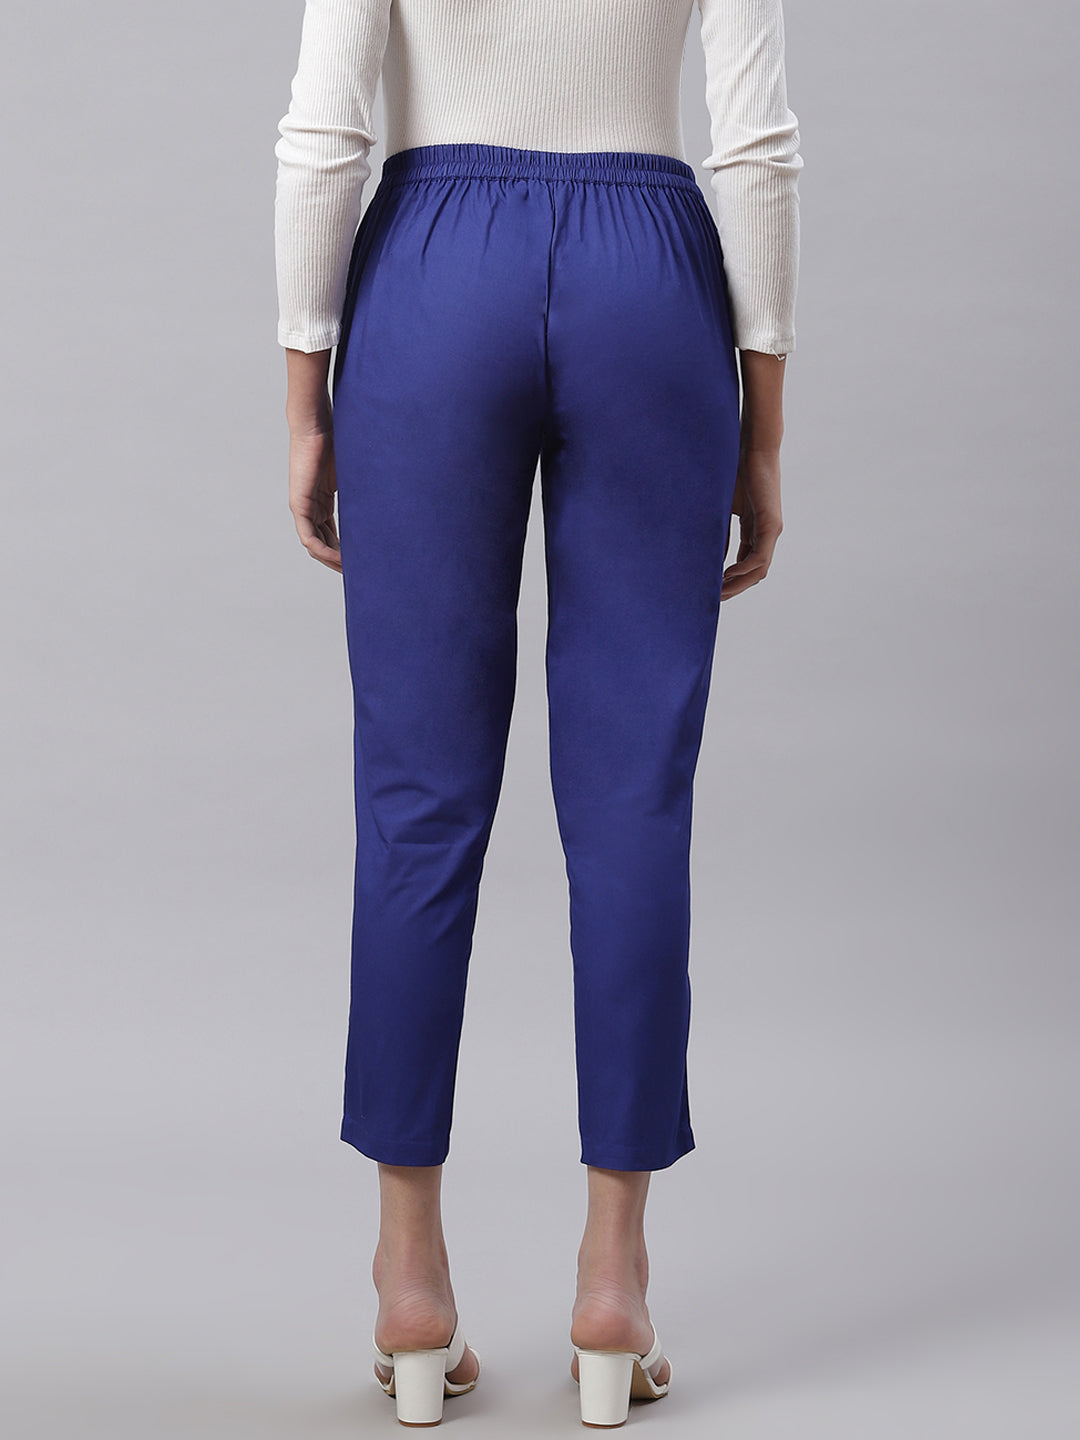 Buy Women Blue Regular Fit Solid Casual Trousers Online  769866  Allen  Solly